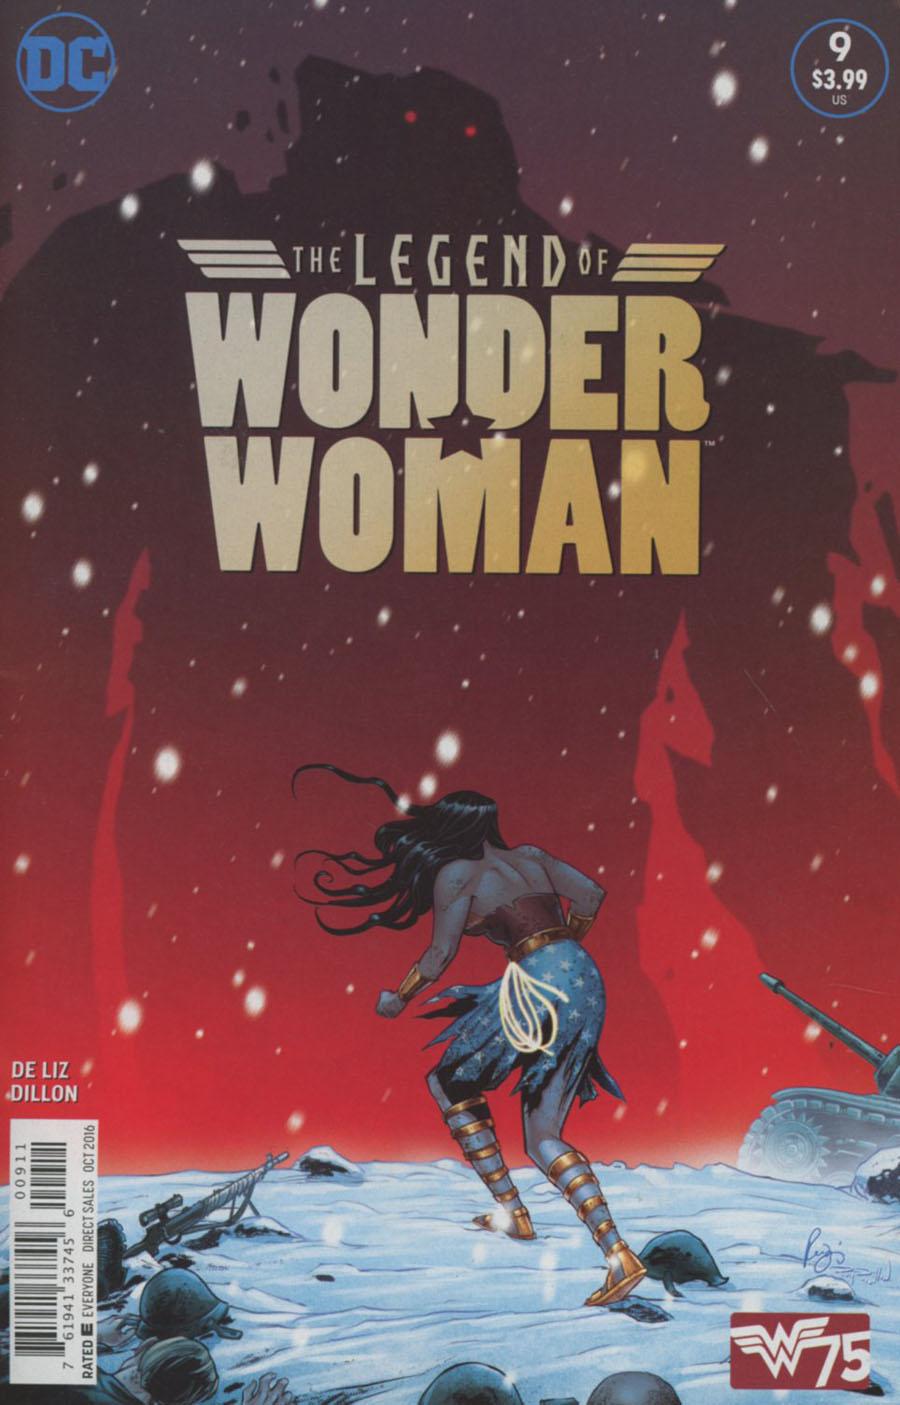 Legend of Wonder Woman Vol. 2 #9